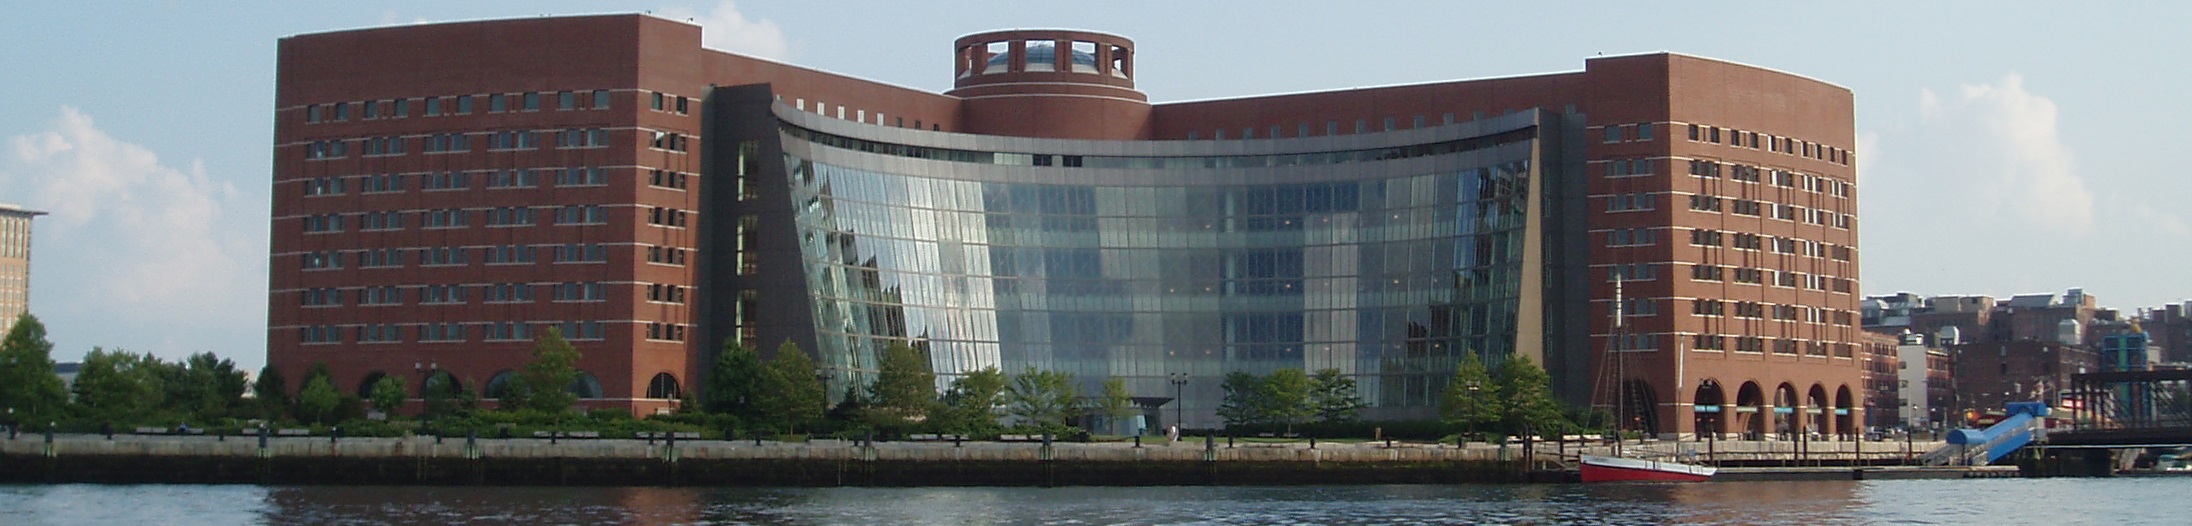 John J. Moakley Federal Courthouse - Boston, MA